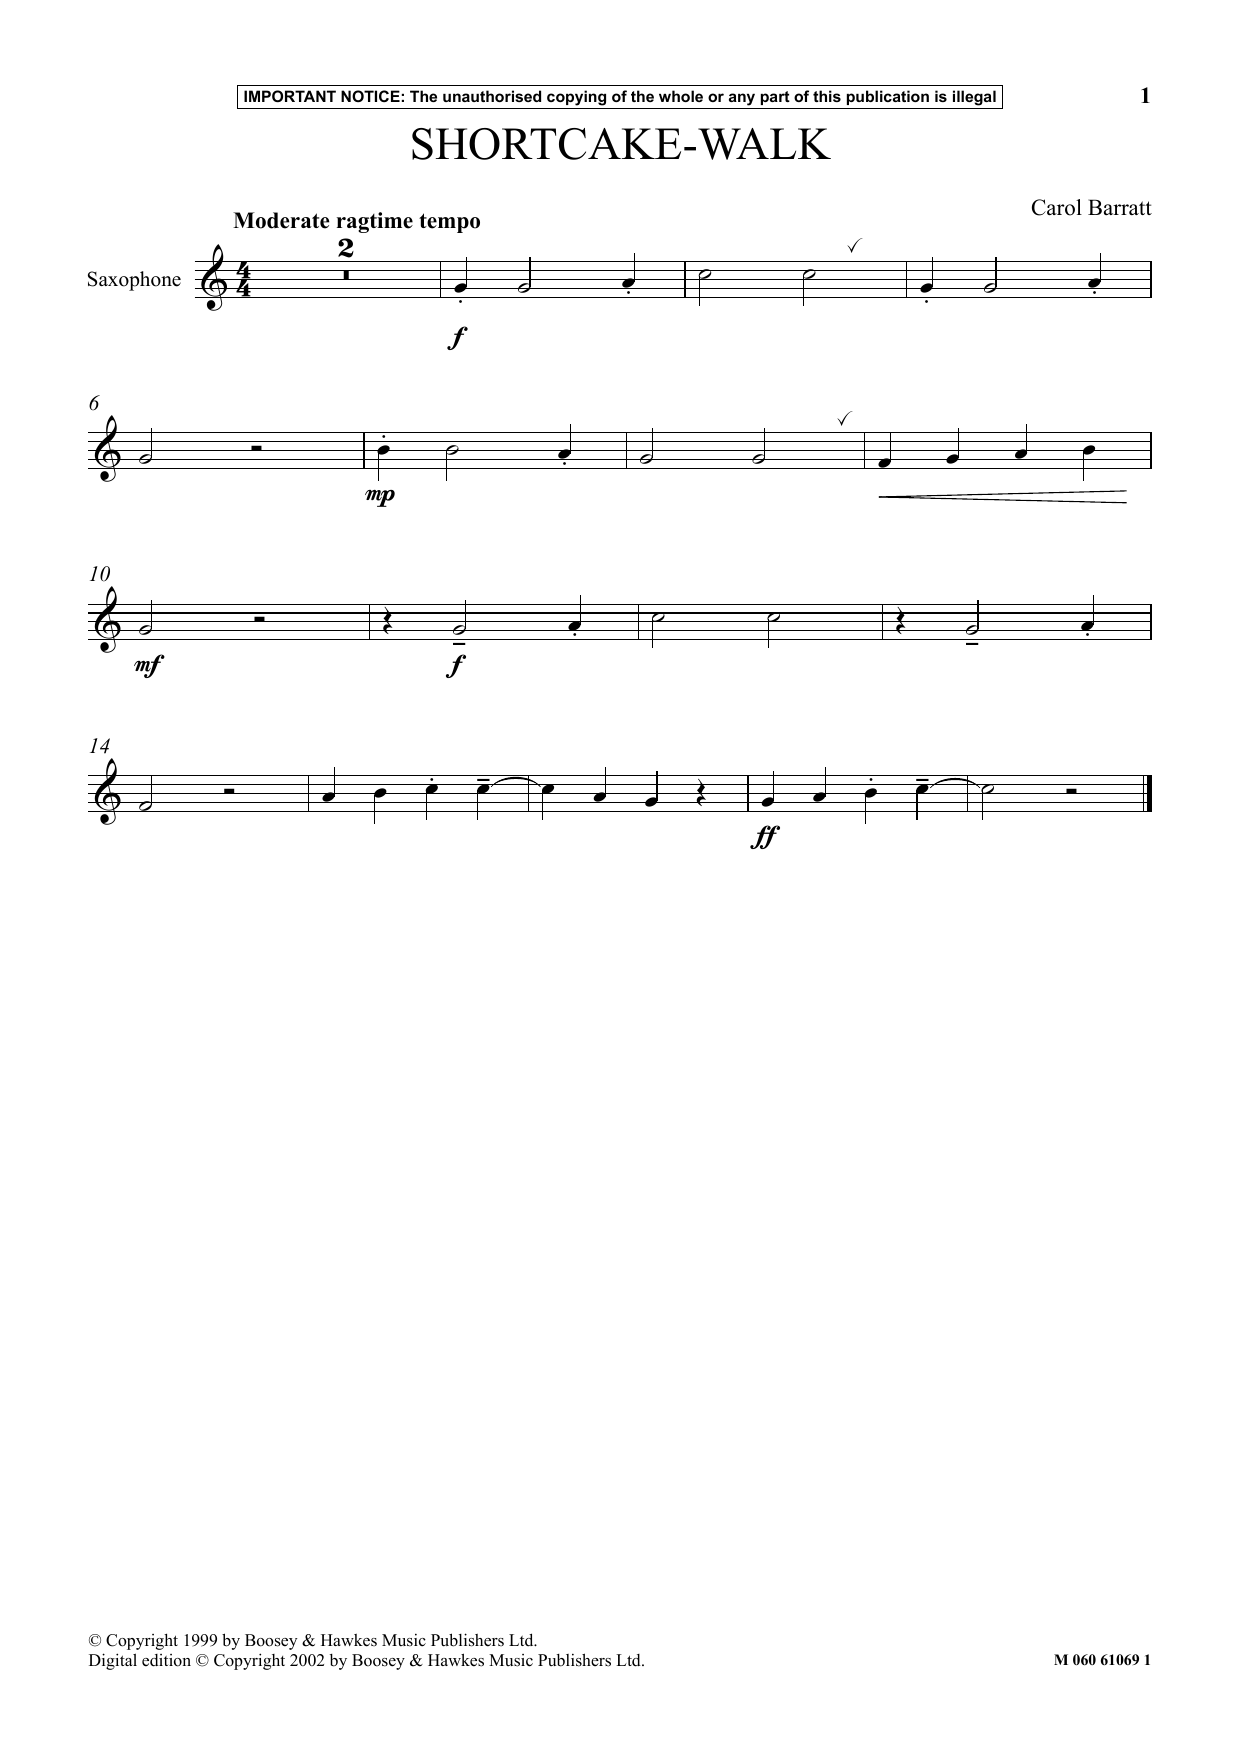 Carol Barratt Shortcake Walk Sheet Music Notes & Chords for Instrumental Solo - Download or Print PDF